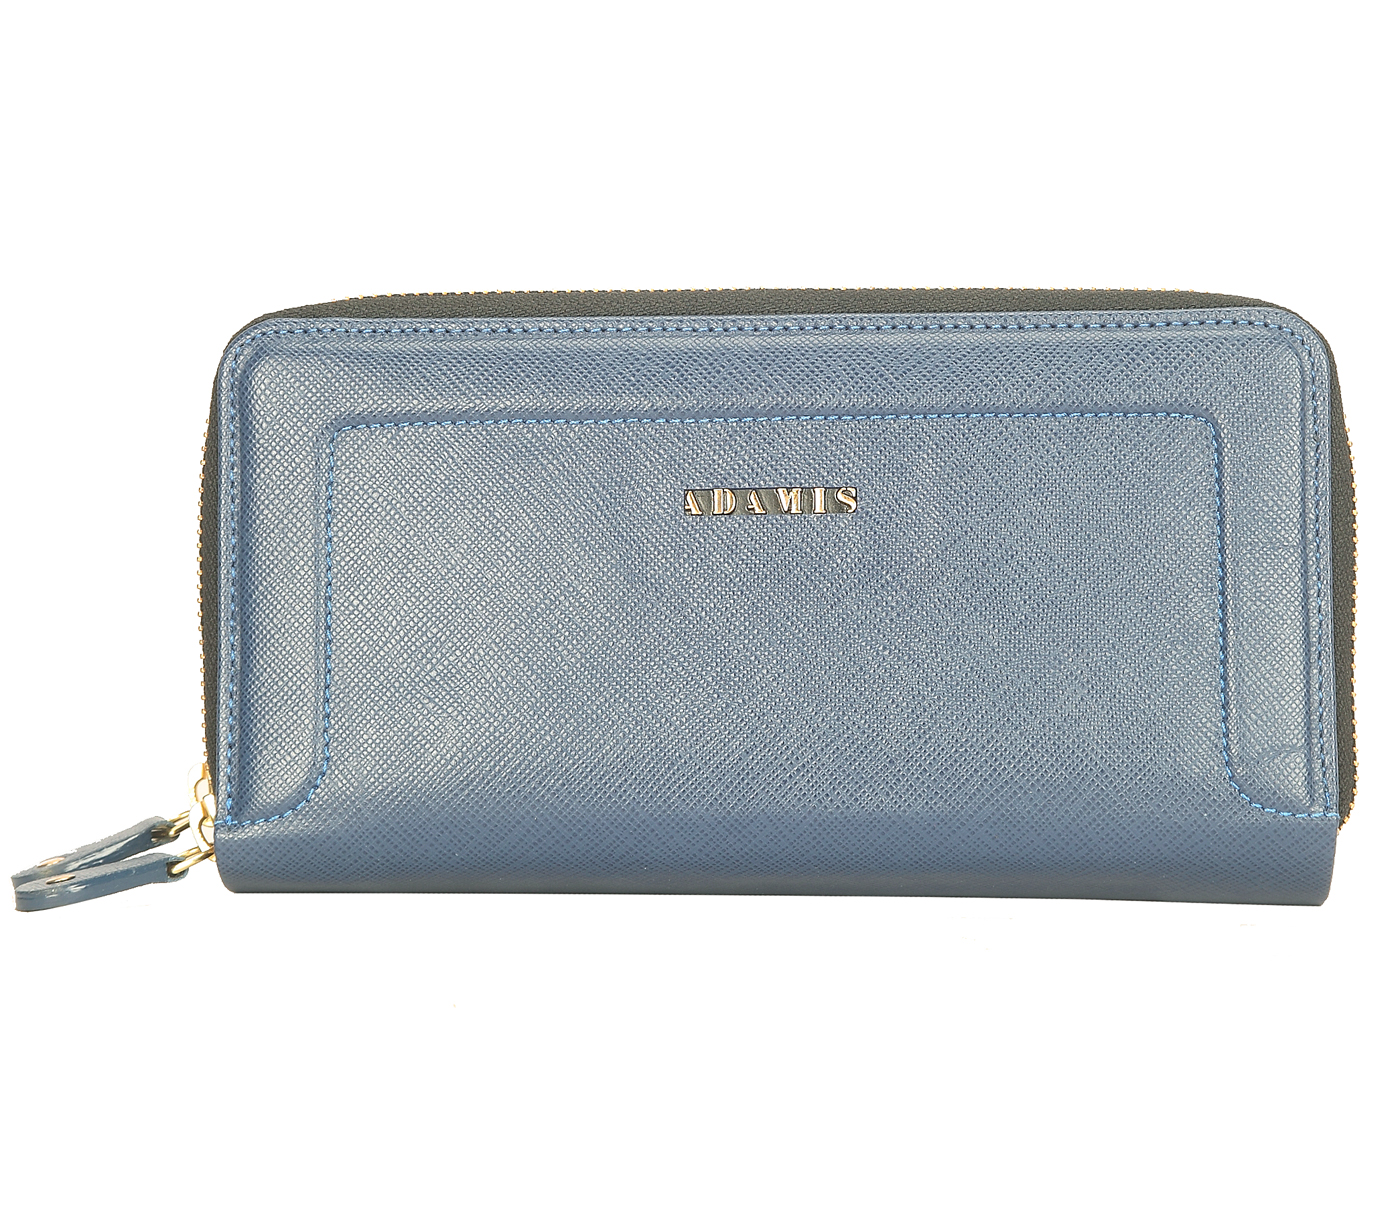 W250-Madeline-Women's day cum travel wallet in Genuine Leather - Blue